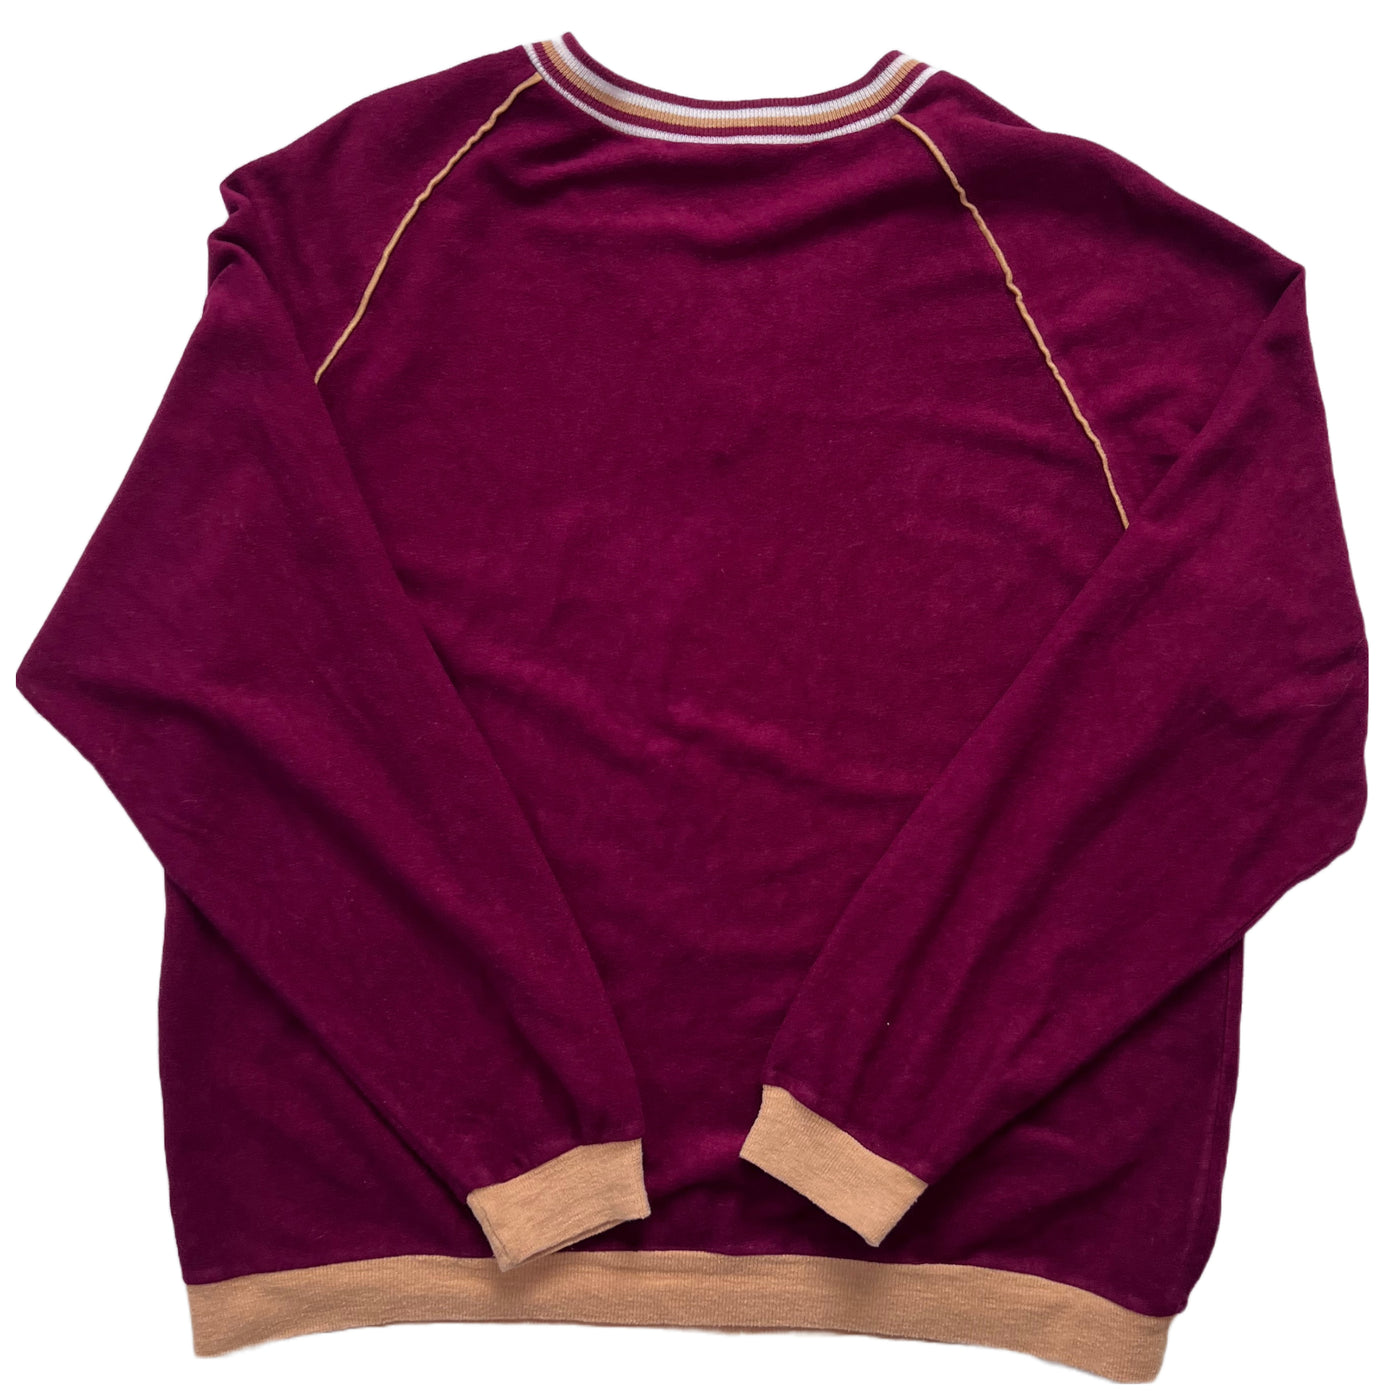 Rare Vintage Harvard Champion Sweatshirt 70's-80's